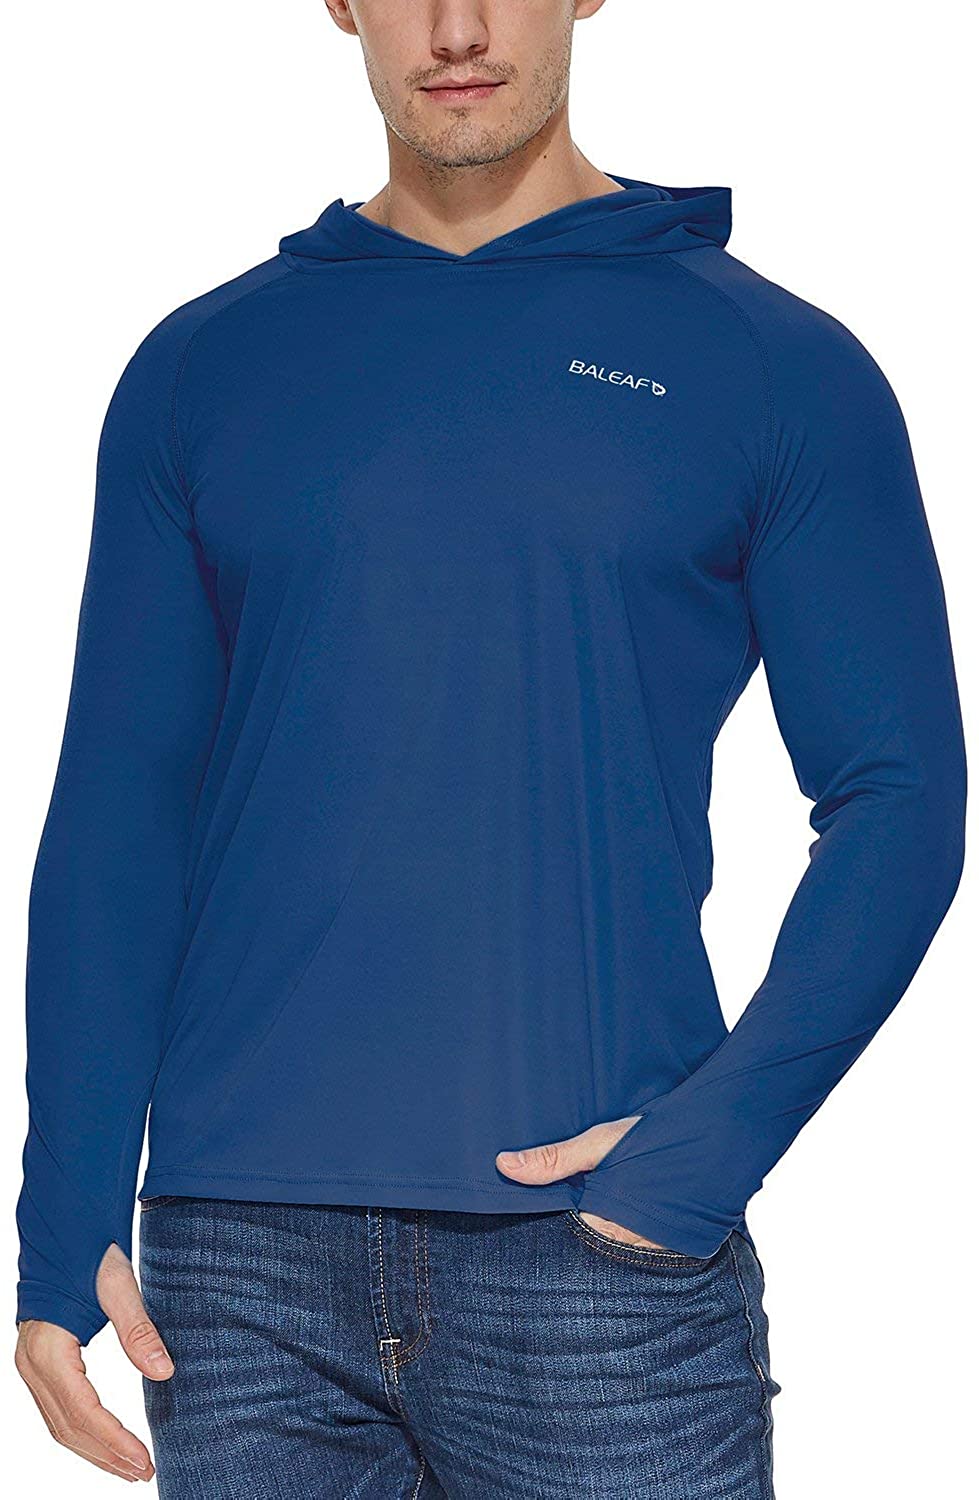 Men‘s UV Sun Protection Shirts Long Sleeve UPF 50 Workout Athletic T-Shirt 